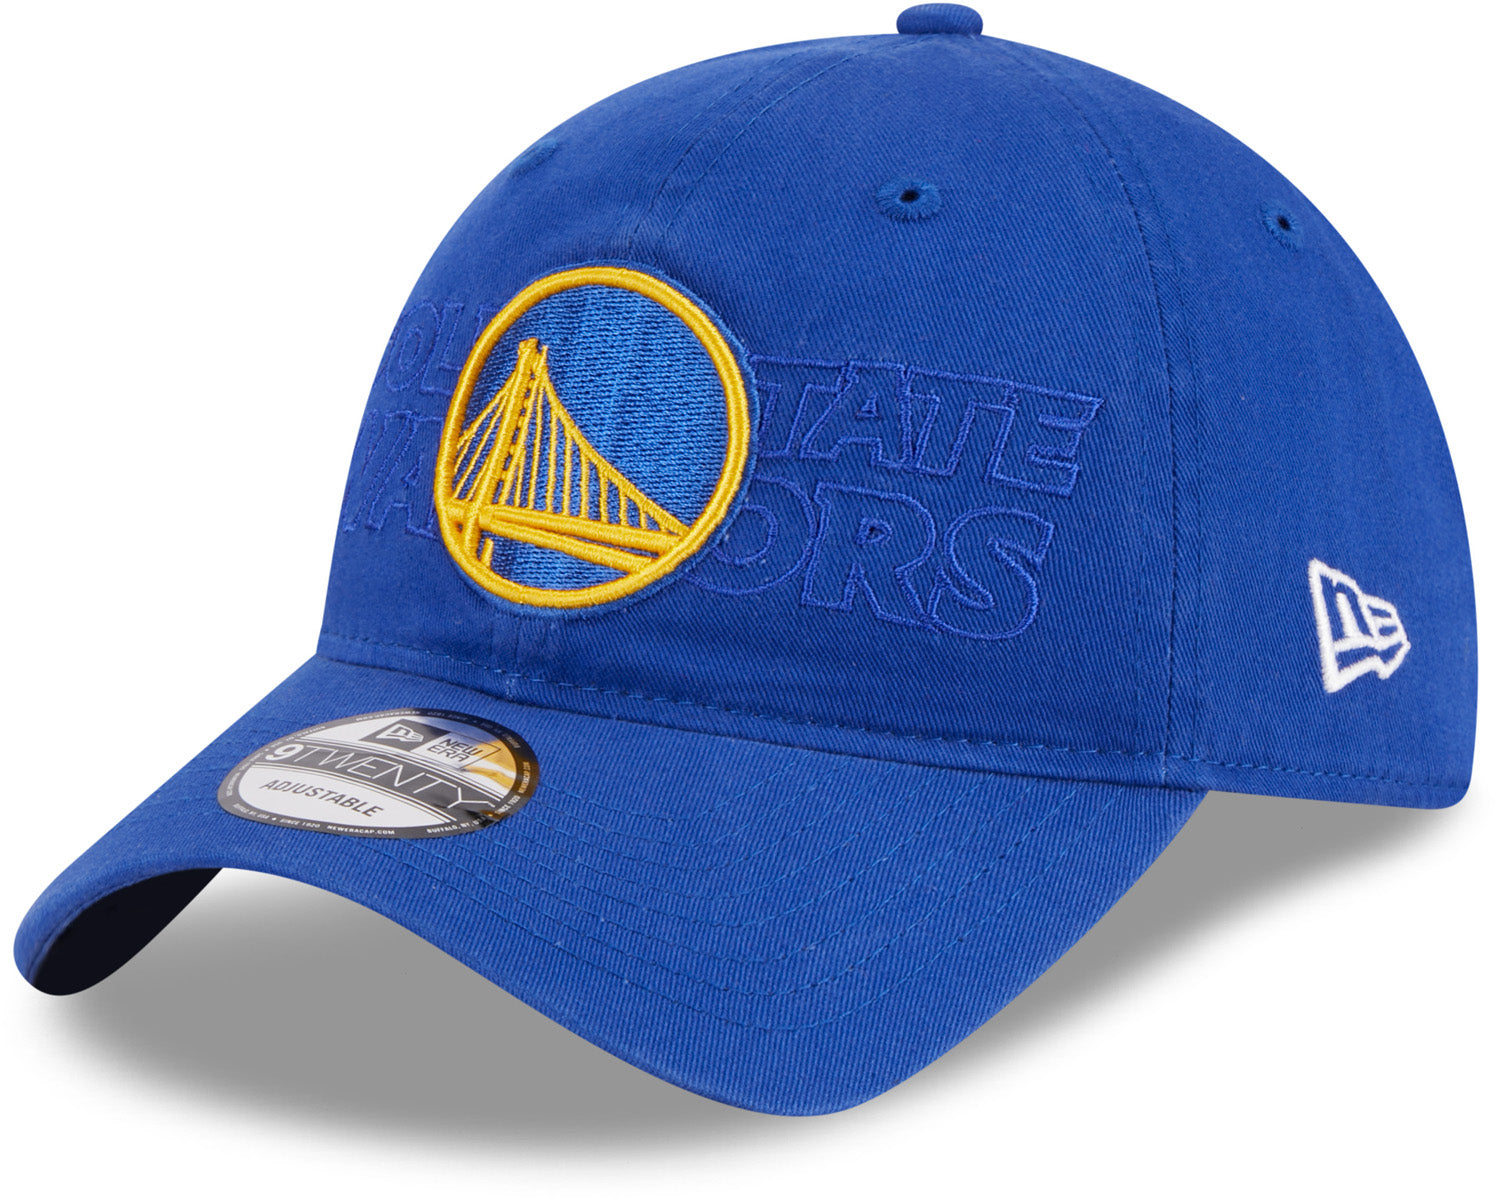 Golden State Warriors Hats, Warriors Snapback, Baseball Cap